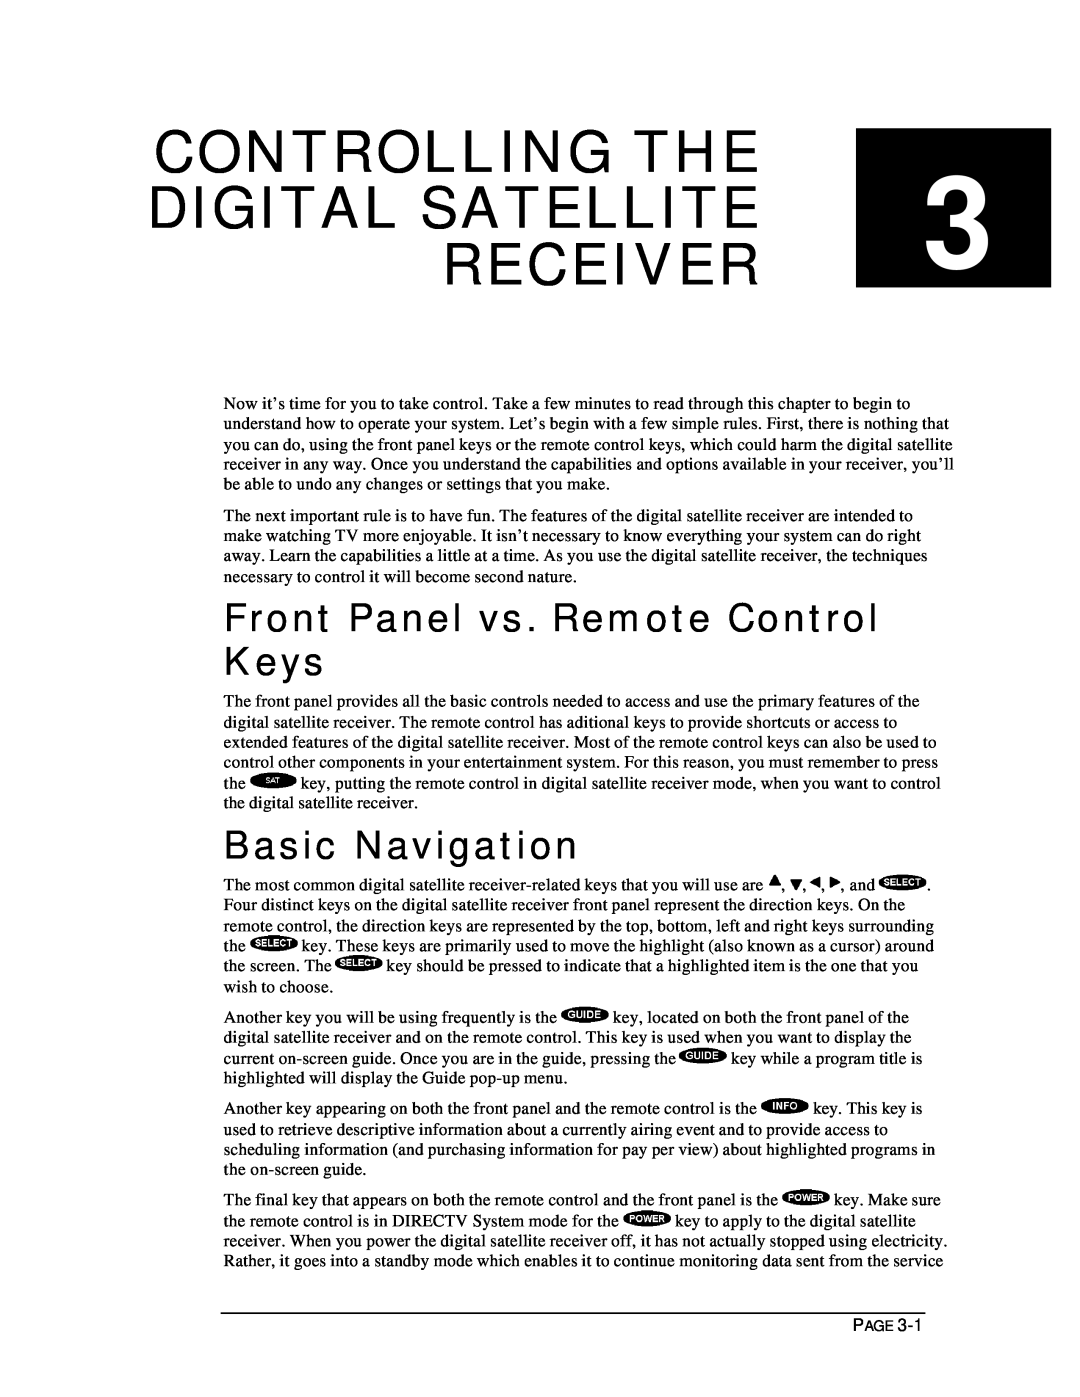 DirecTV HIRD-D11 Controlling The Digital Satellite Receiver, Front Panel vs. Remote Control Keys, Basic Navigation 